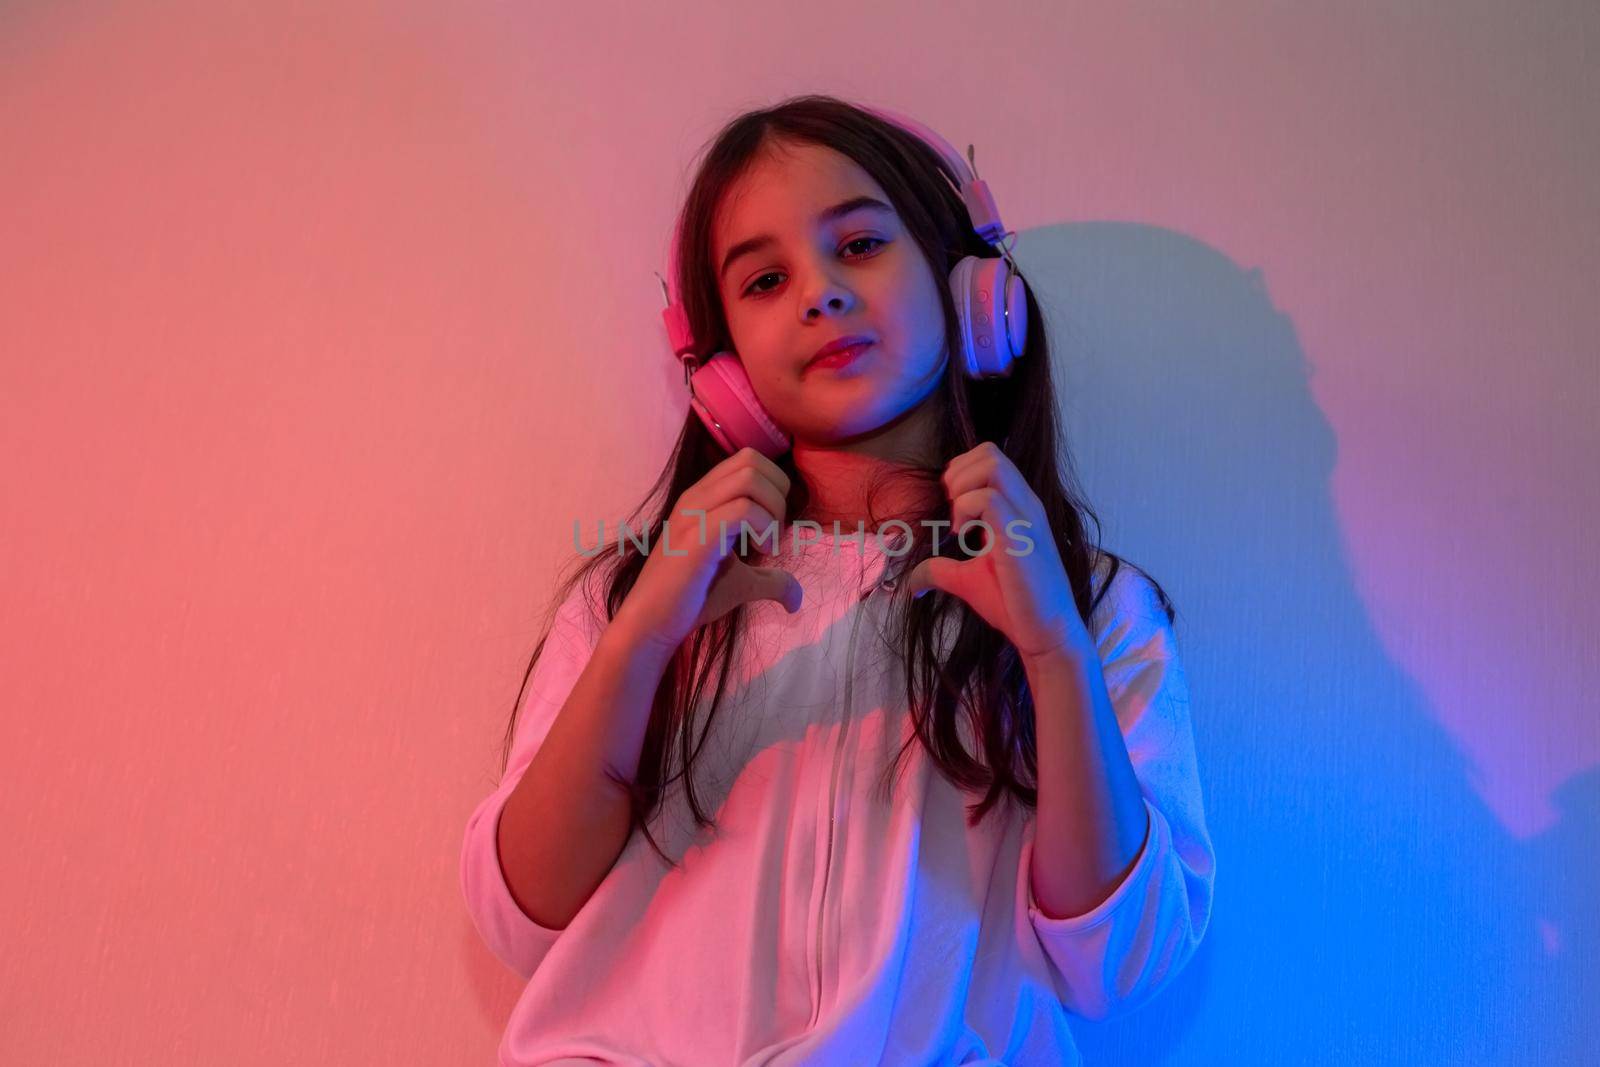 Little girl in pink headphones dancing to music in neon pink blue light